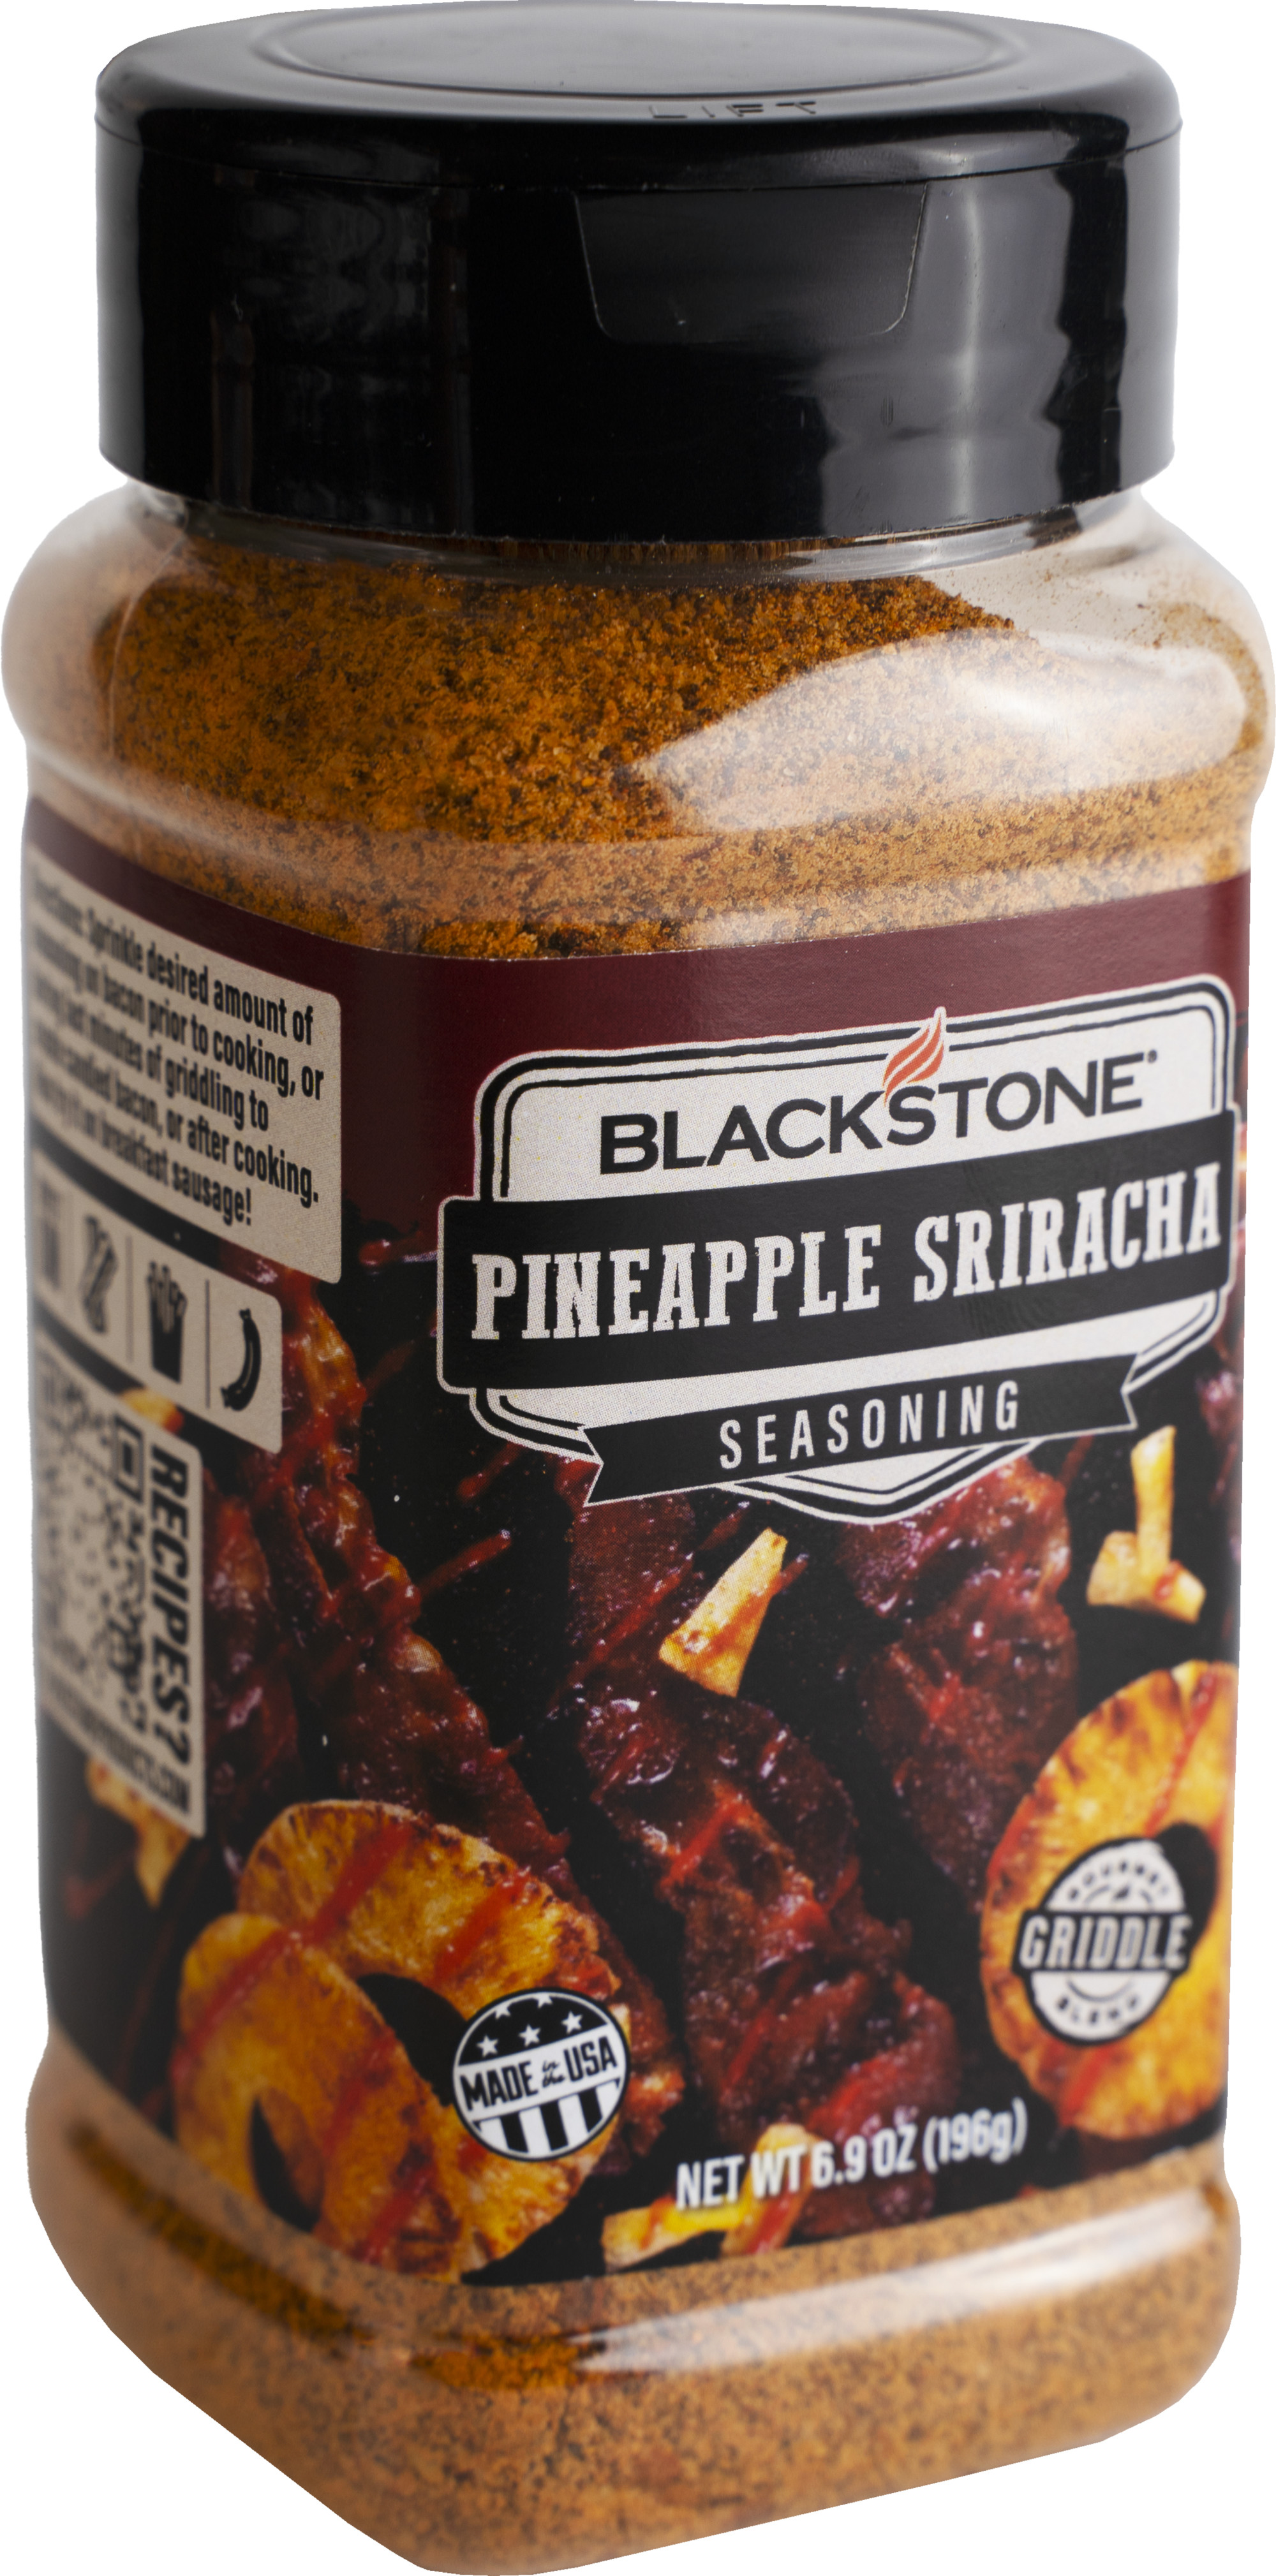 Blackstone Pineapple Sriracha Savory Dry Mix Seasoning, 6.9 oz - Gluten-Free - image 1 of 2